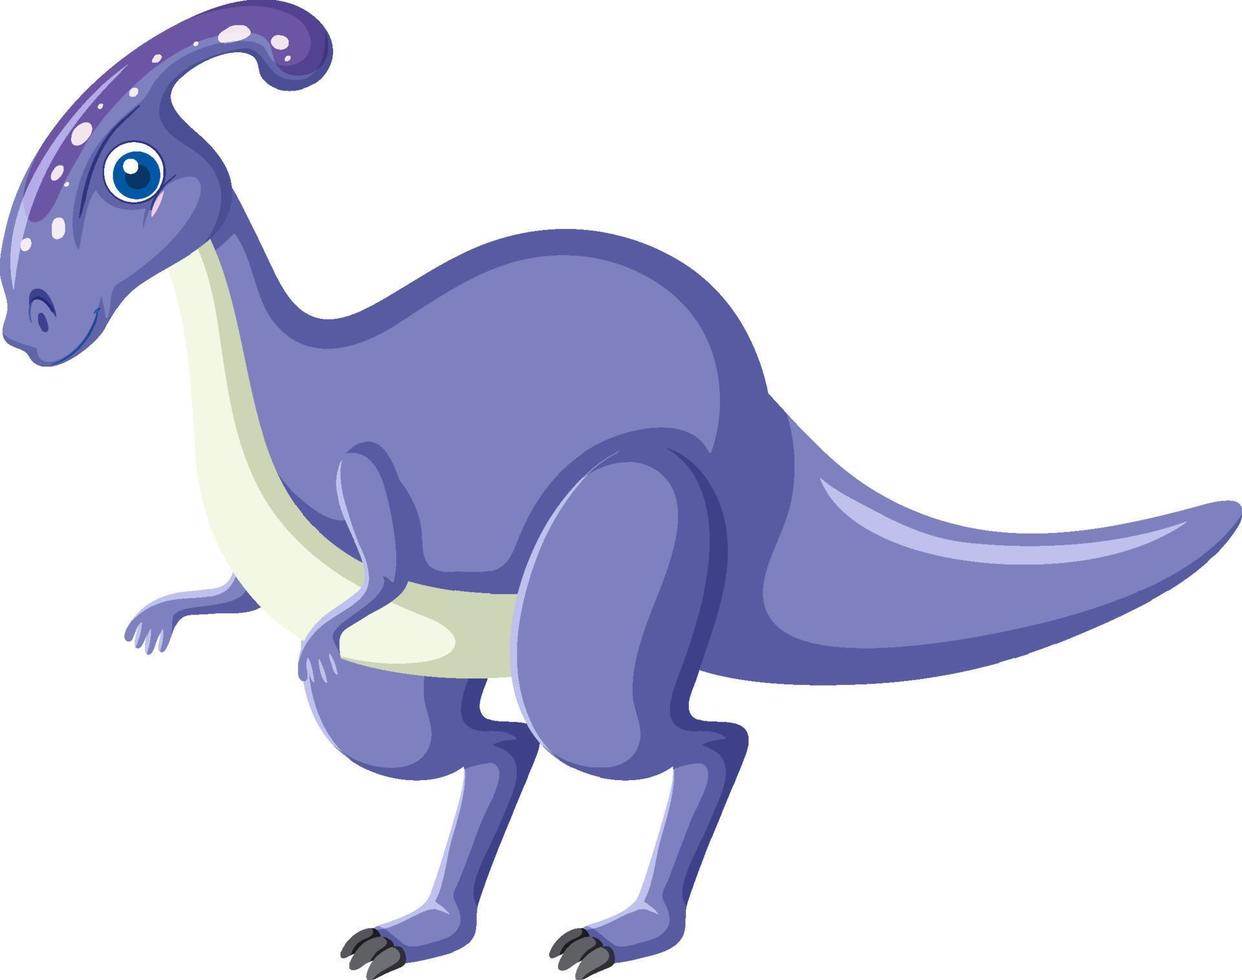 Cute Parasaurolophus Dinosaur Cartoon vector